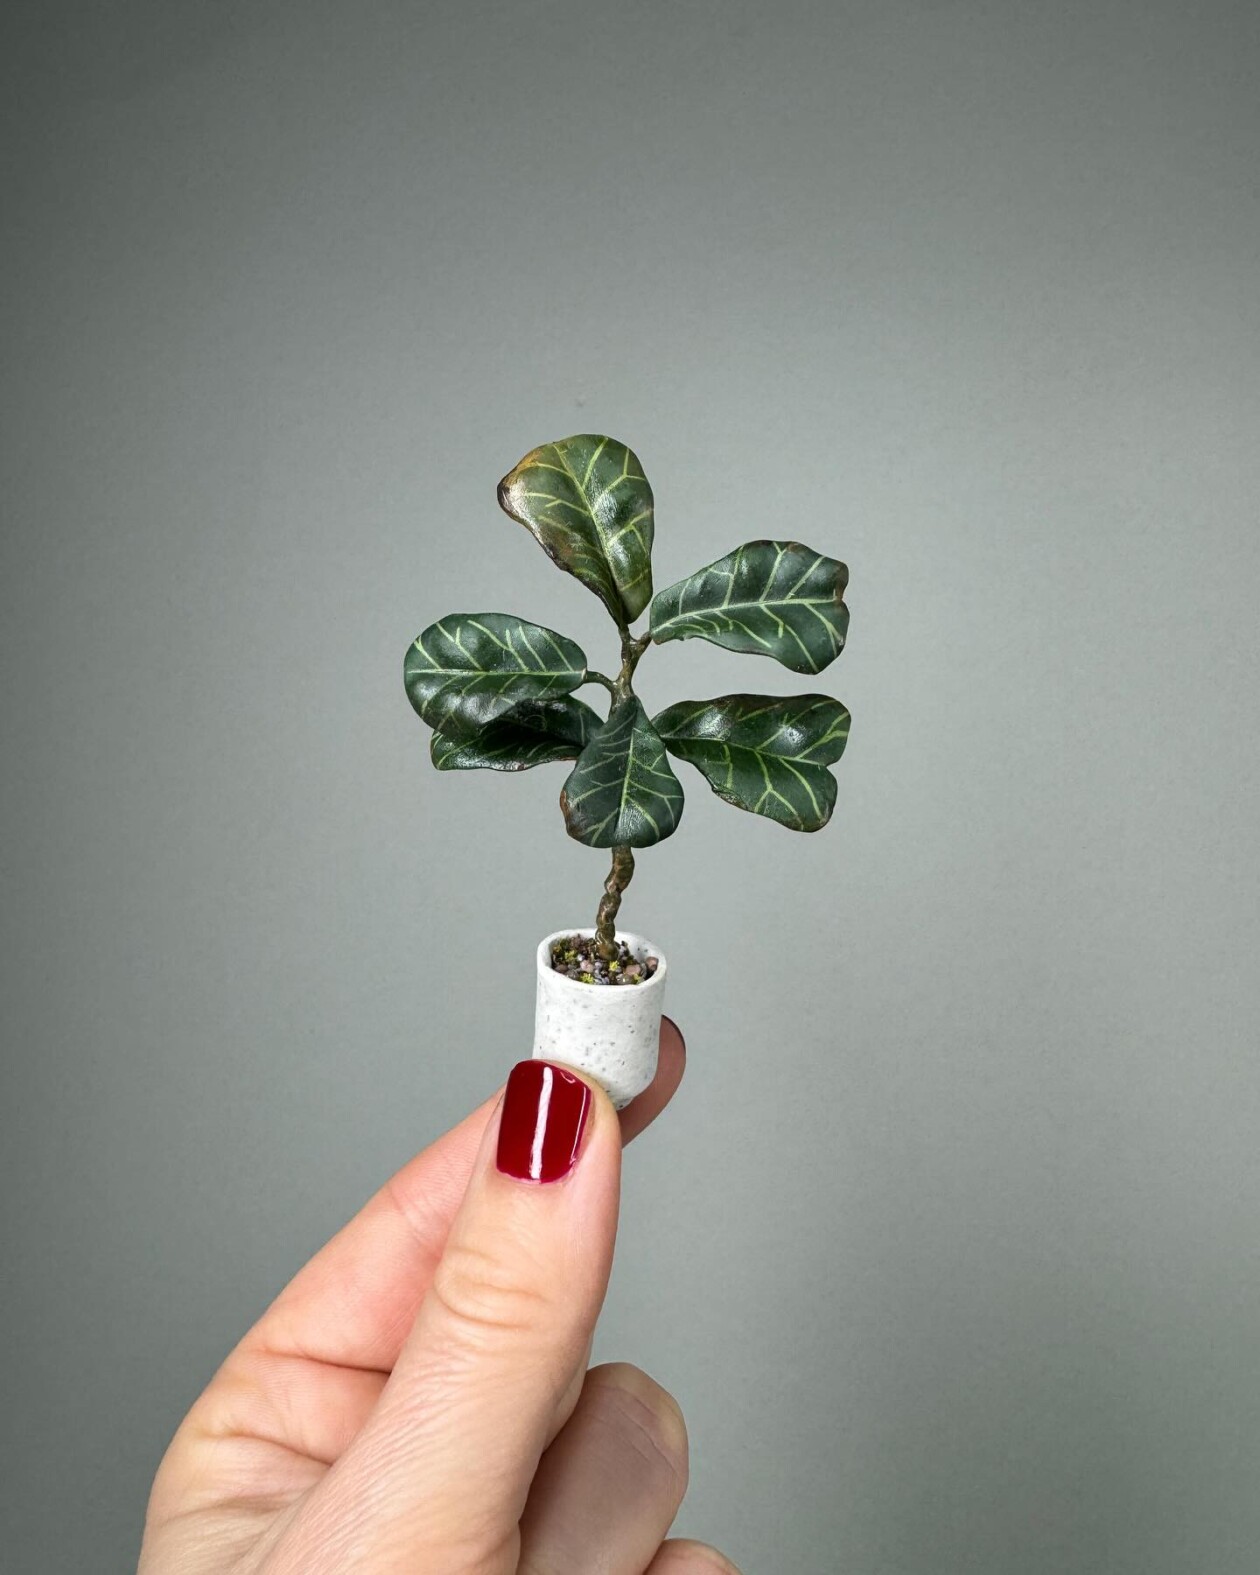 Handmade Miniature Polymer Clay Plants By Astrid Wilk (14)